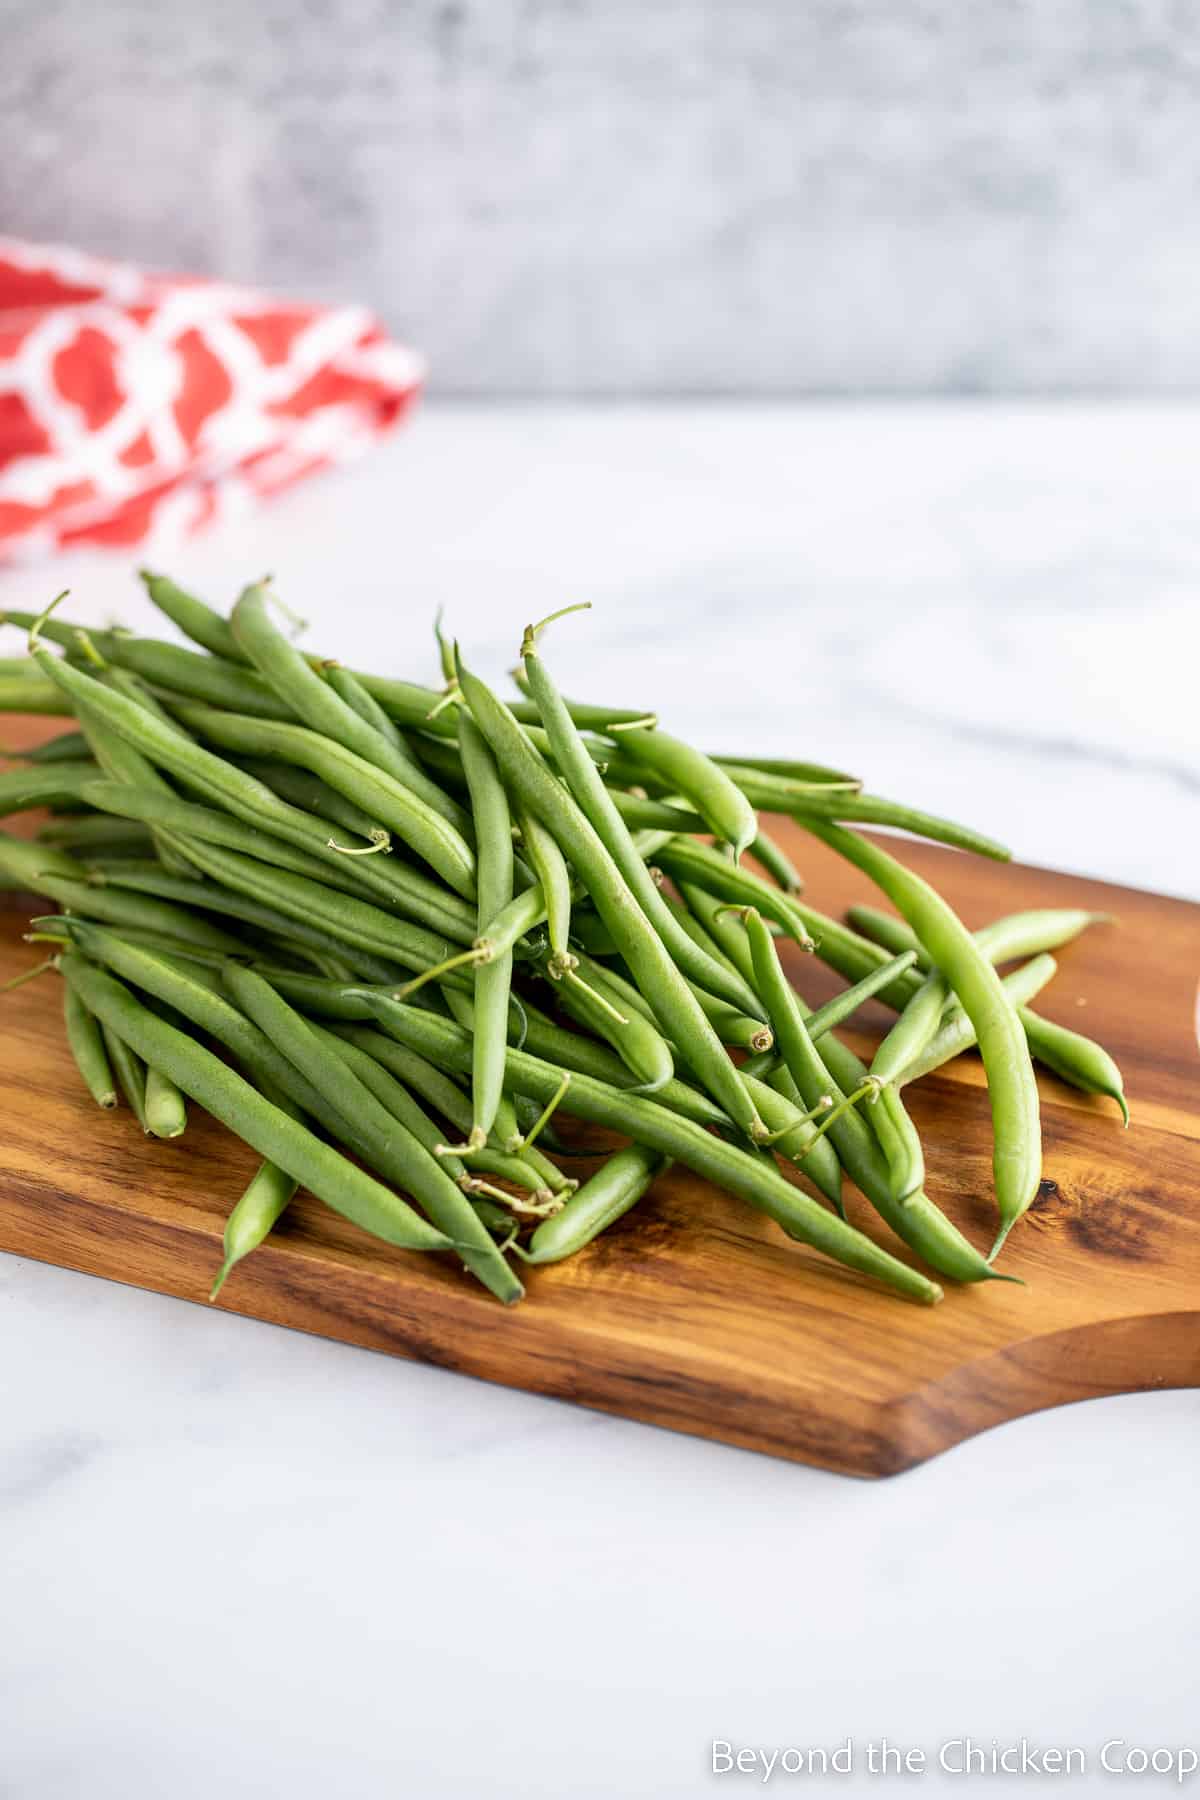 Fresh green beans on a wooden cutting board.